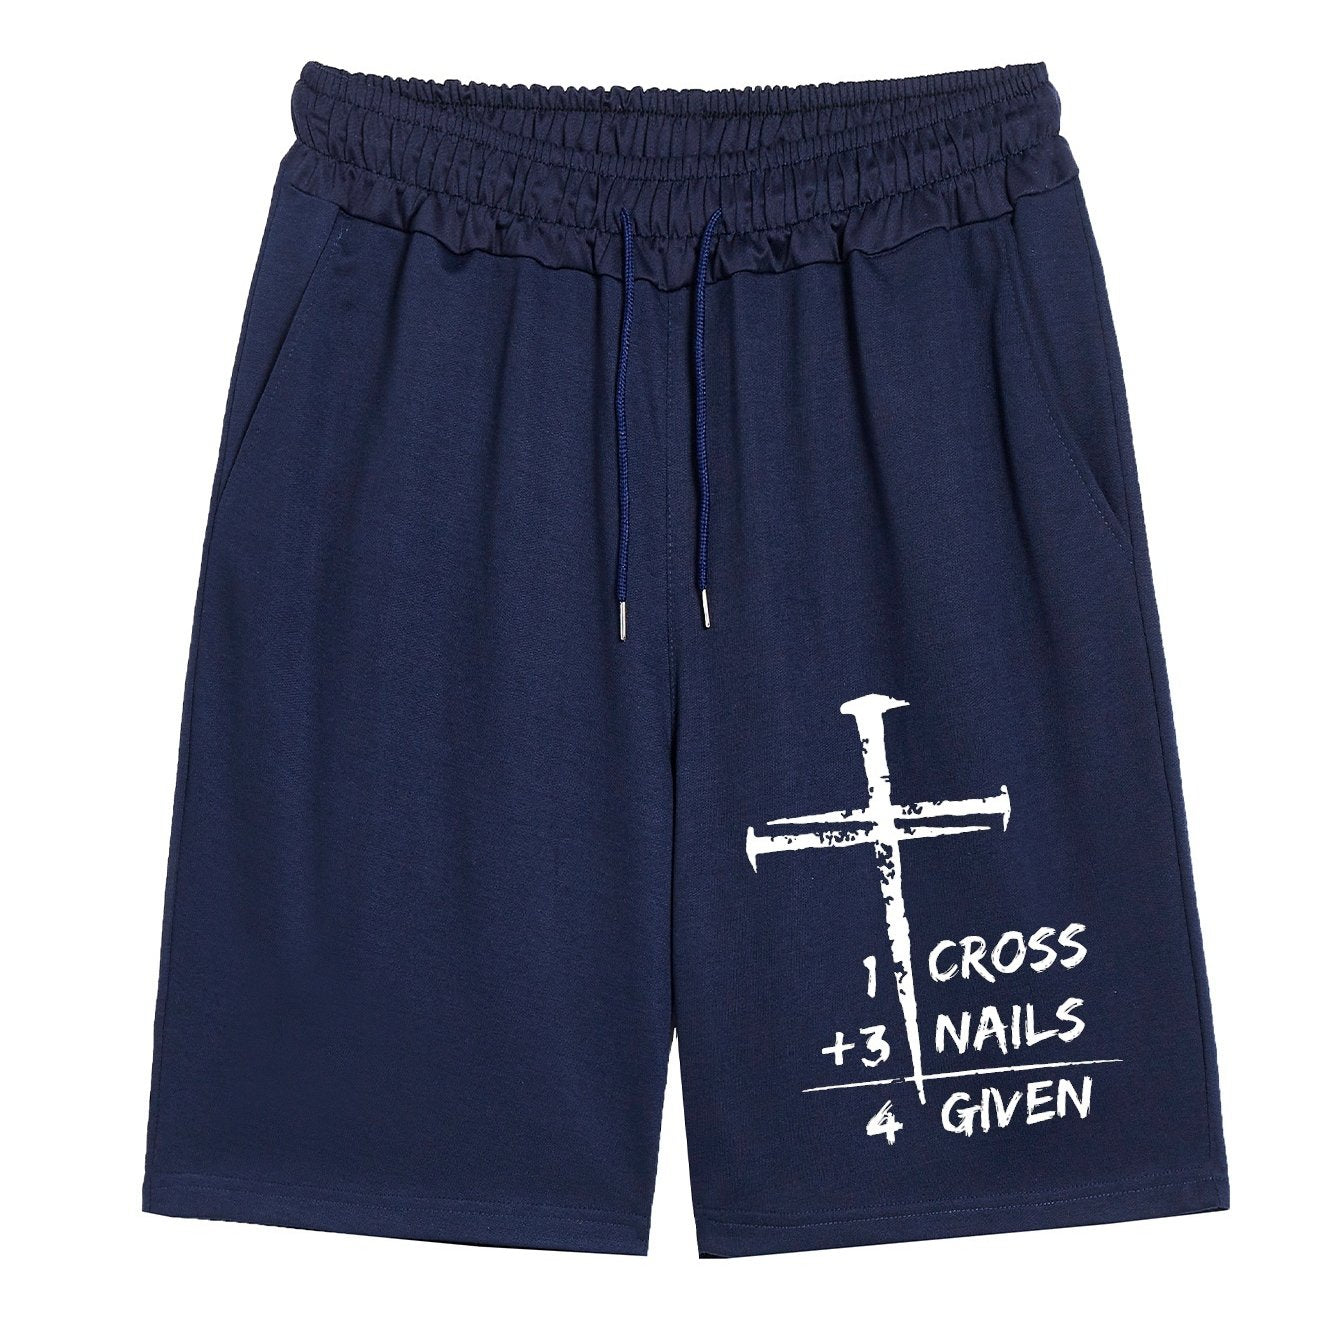 1 Cross 3 Nails 4 Given Men's Christian Shorts claimedbygoddesigns